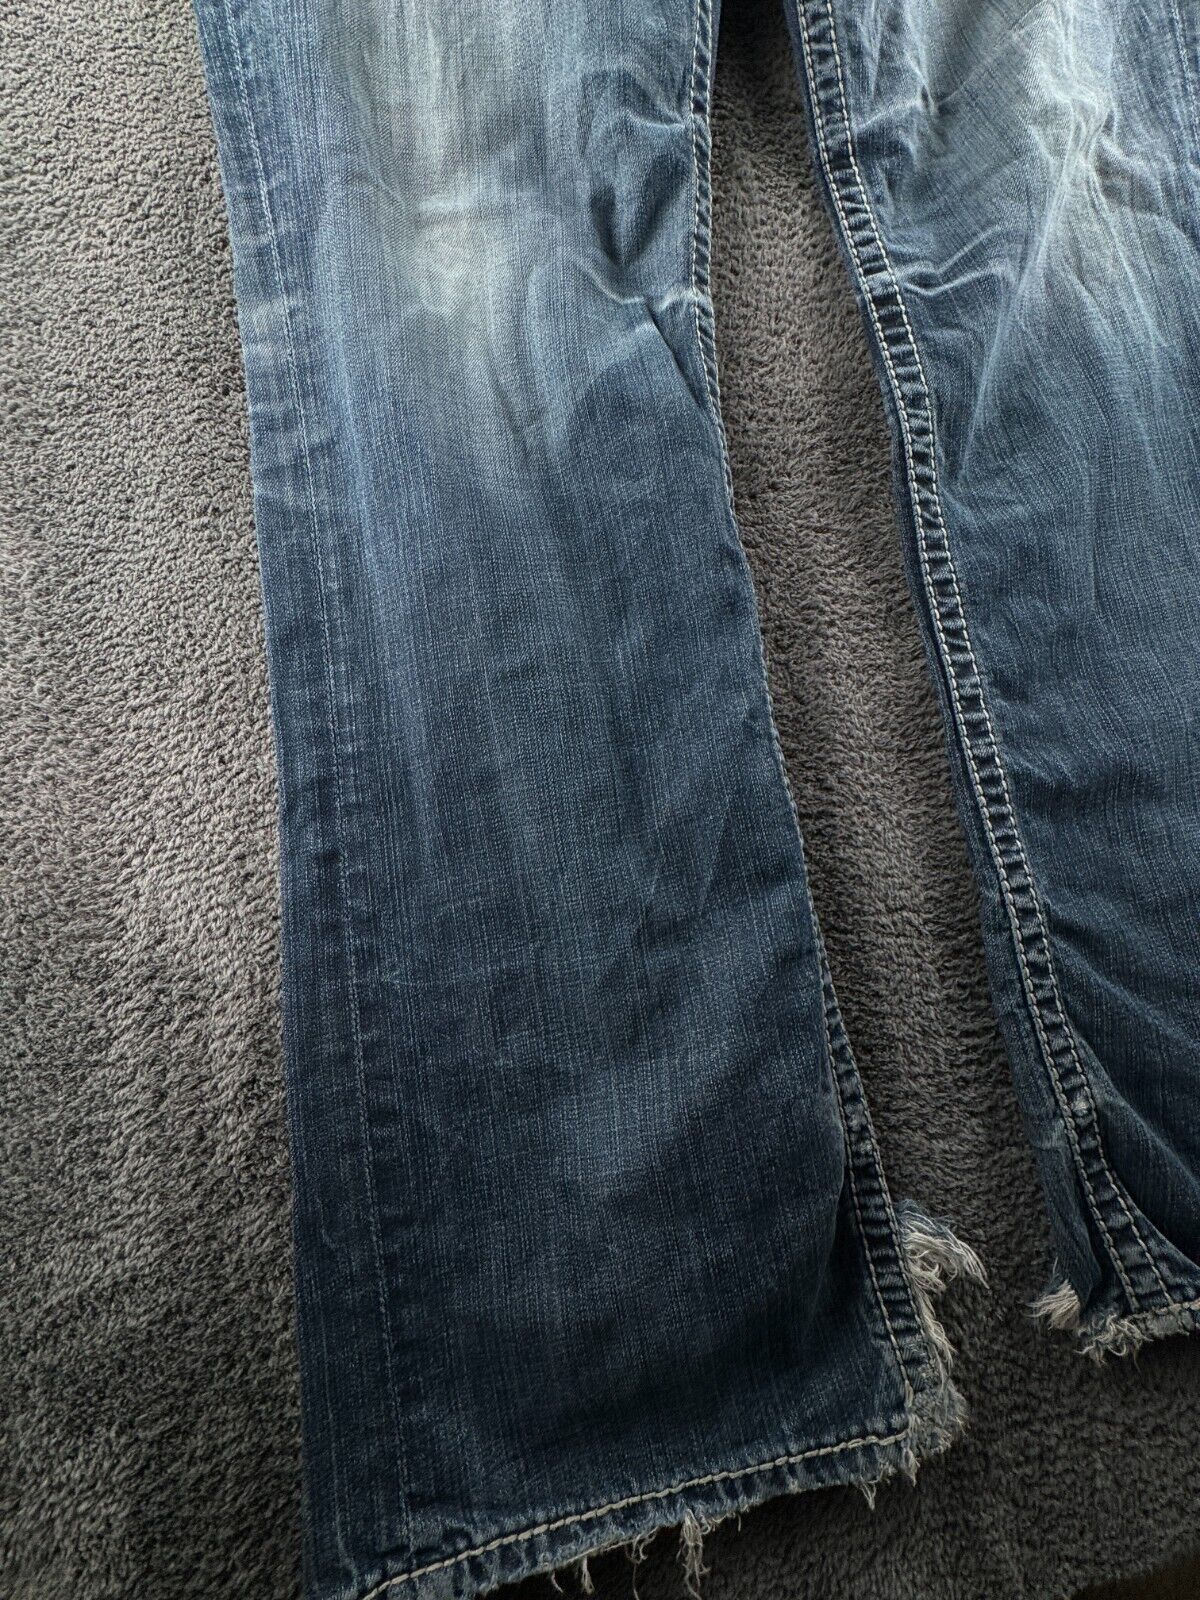 Big Star Denim Blue Jeans Men Urban Unton Straigh… - image 7